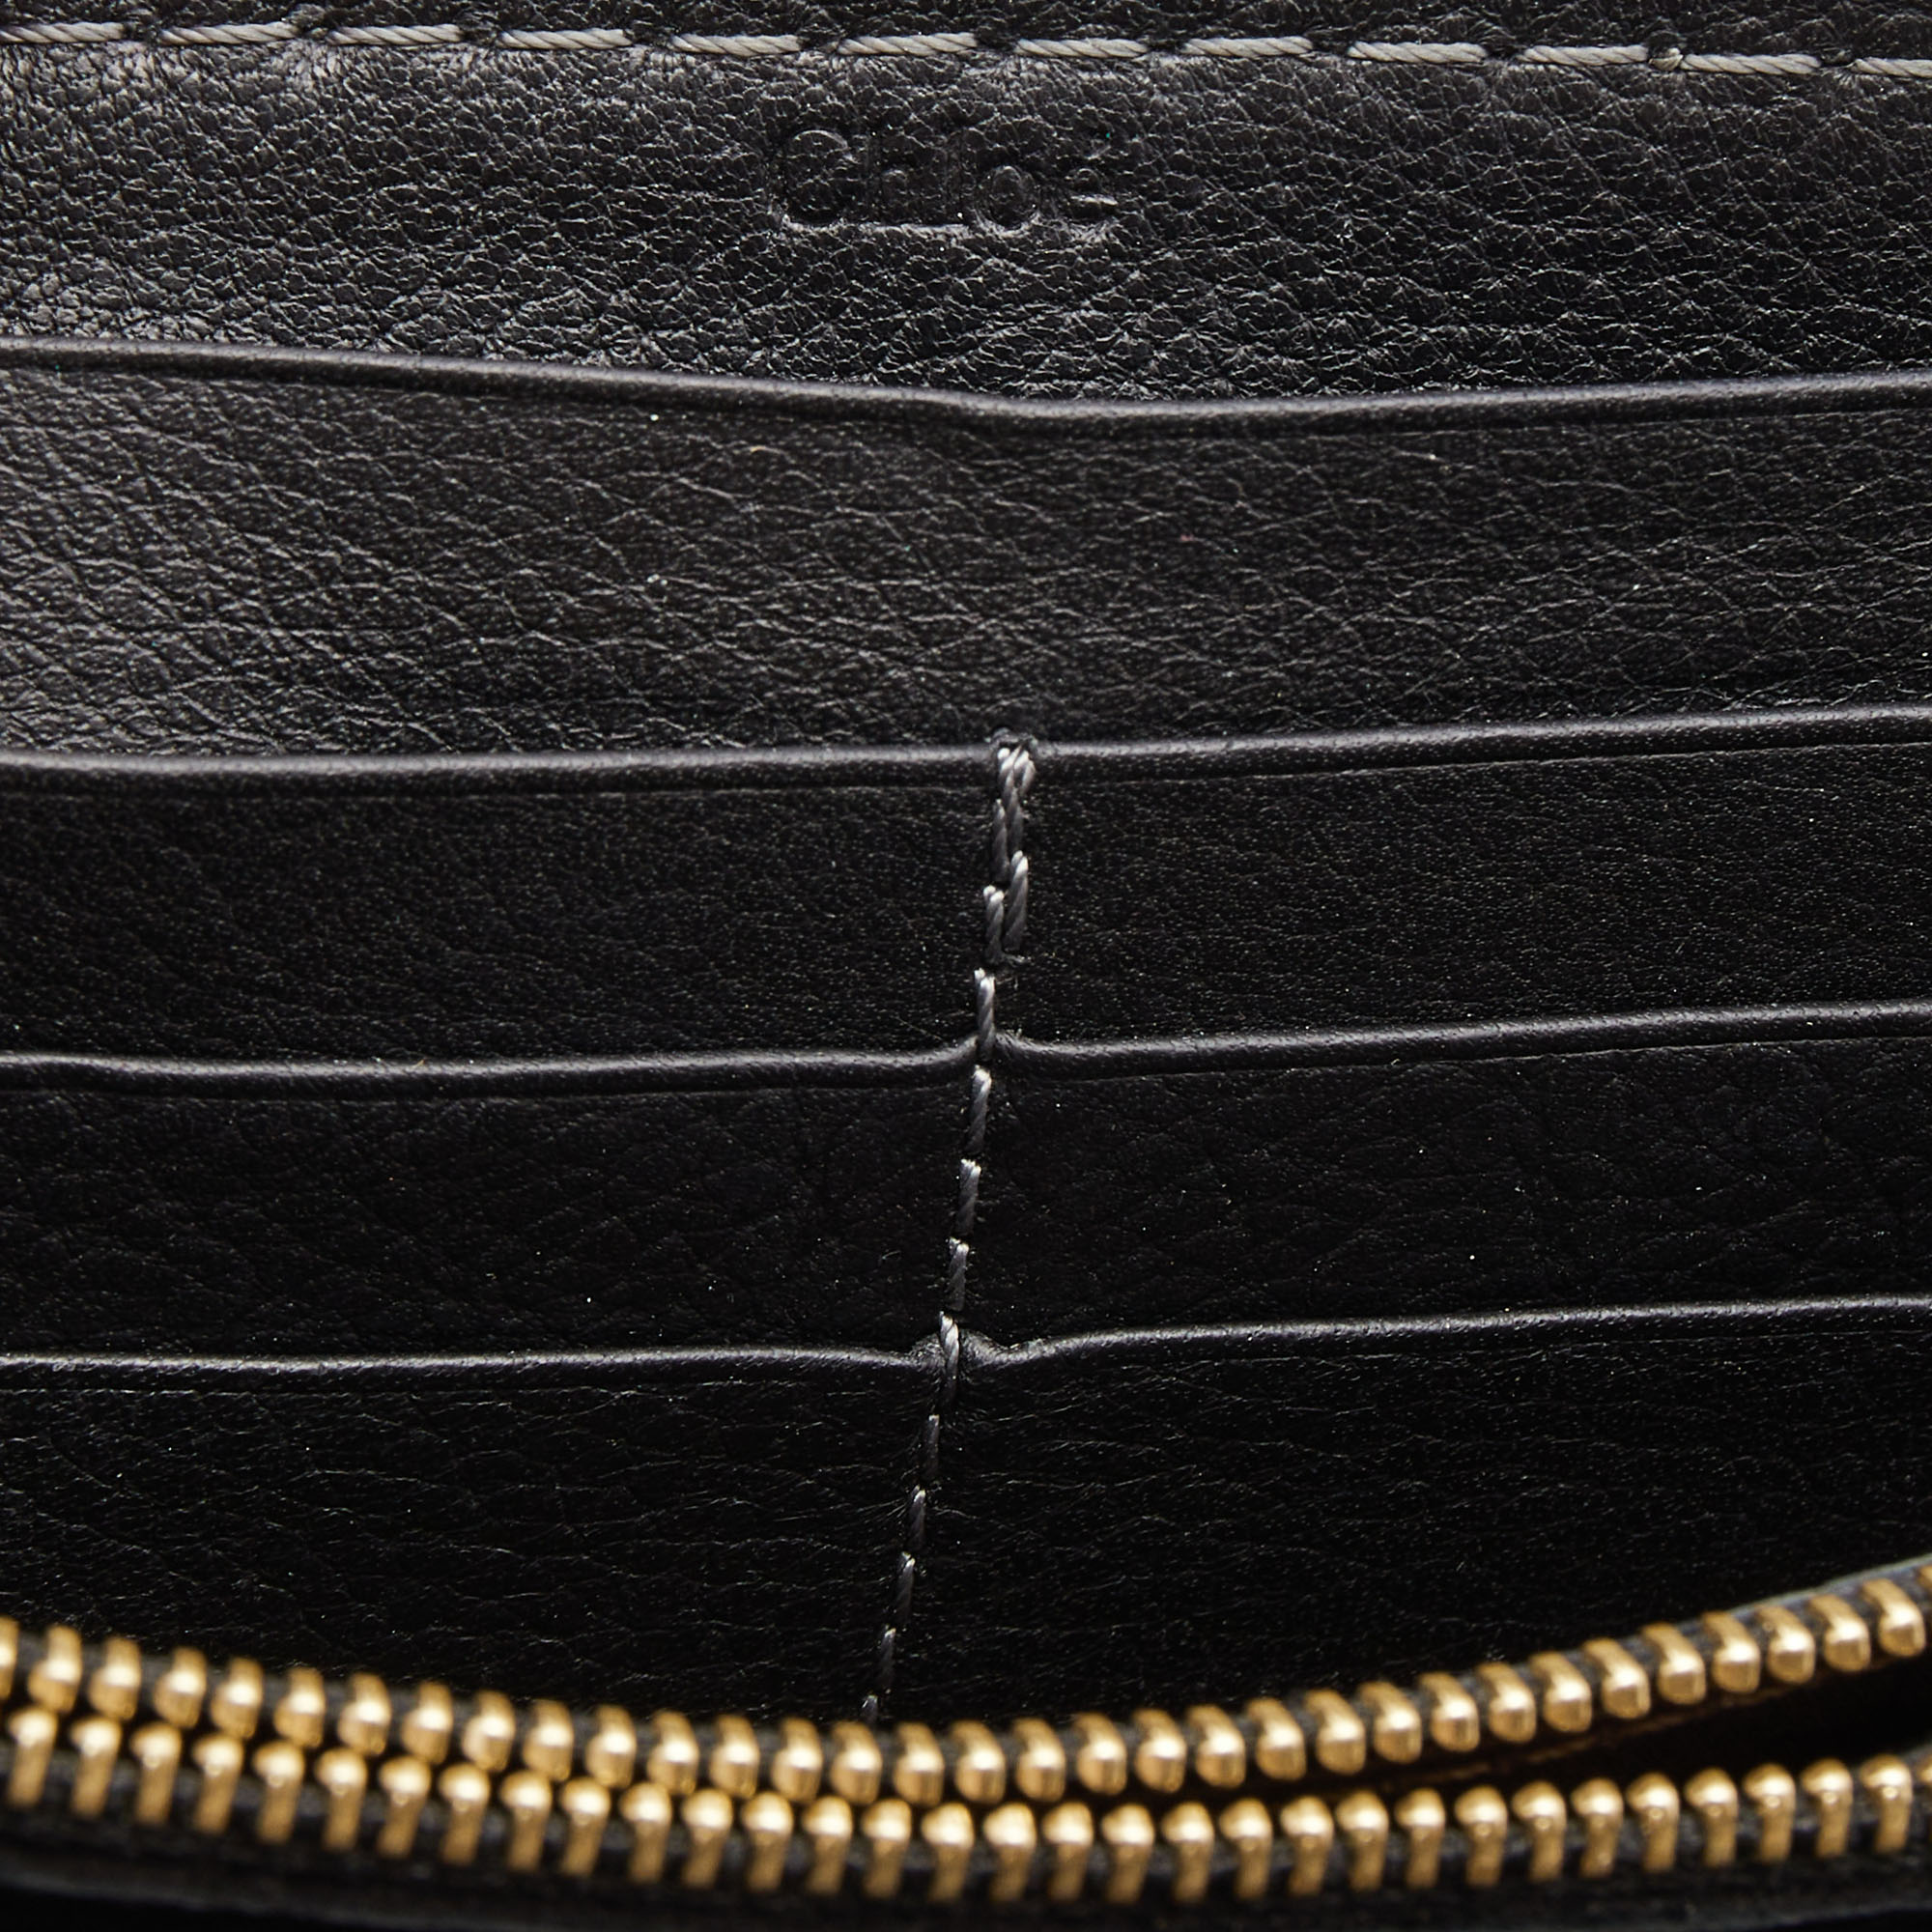 Chloe Black Leather Marcie Zip Around Continental Wallet